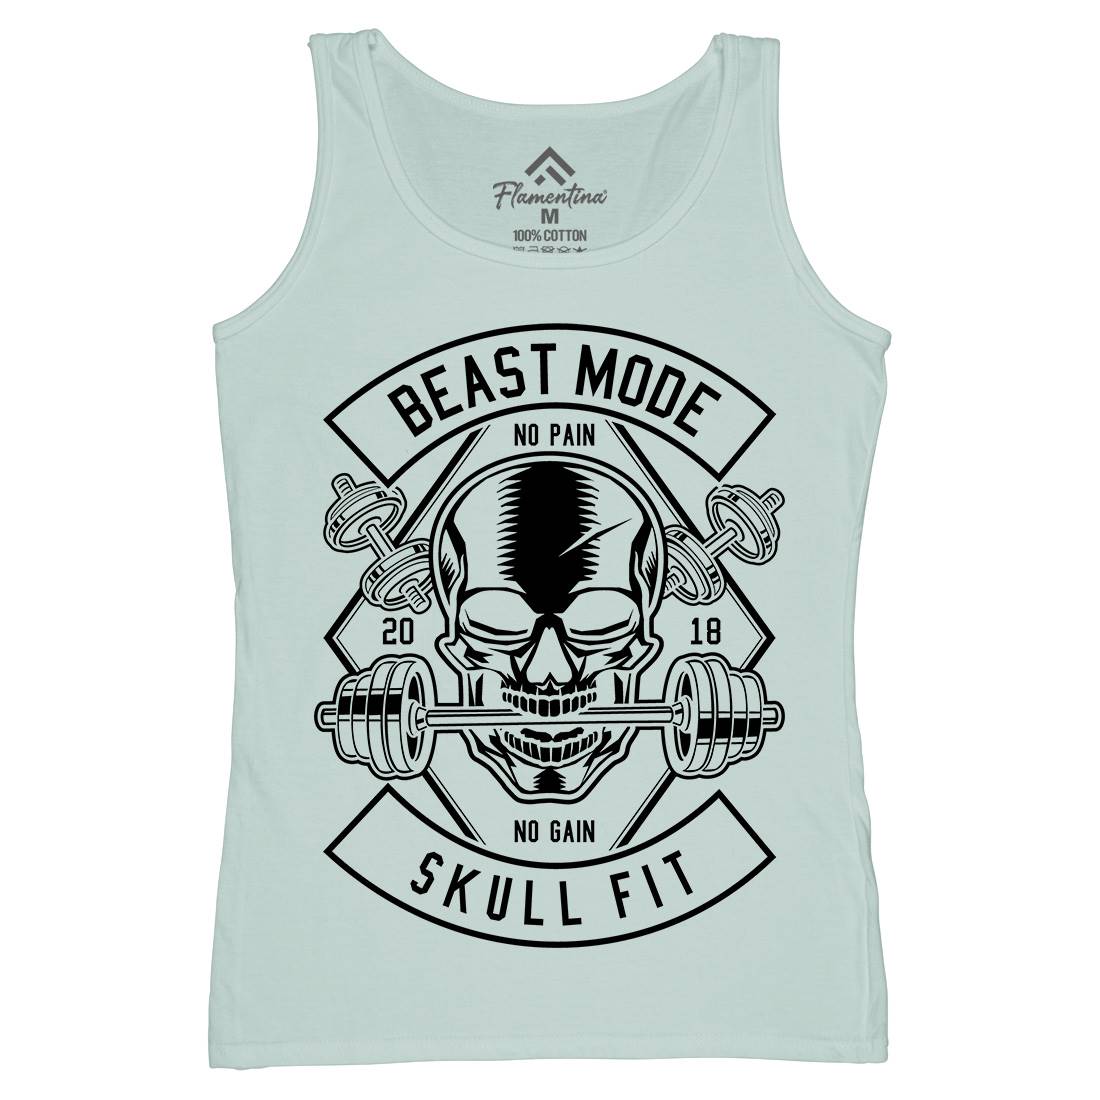 Skull Fit Womens Organic Tank Top Vest Gym B628